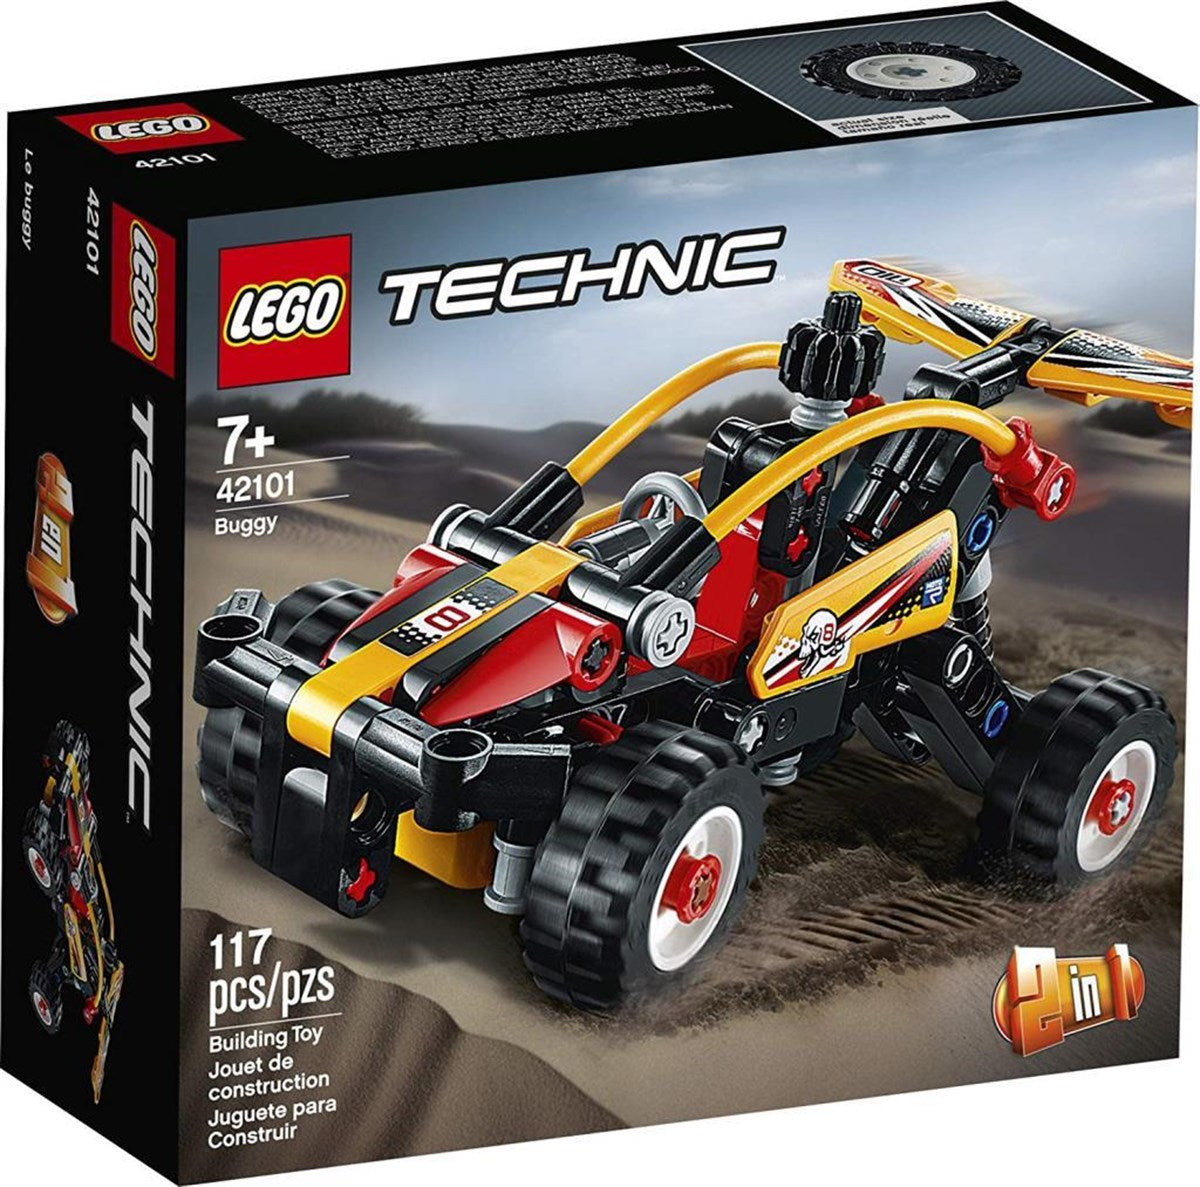 Lego Technic Araba 42101 | Toysall